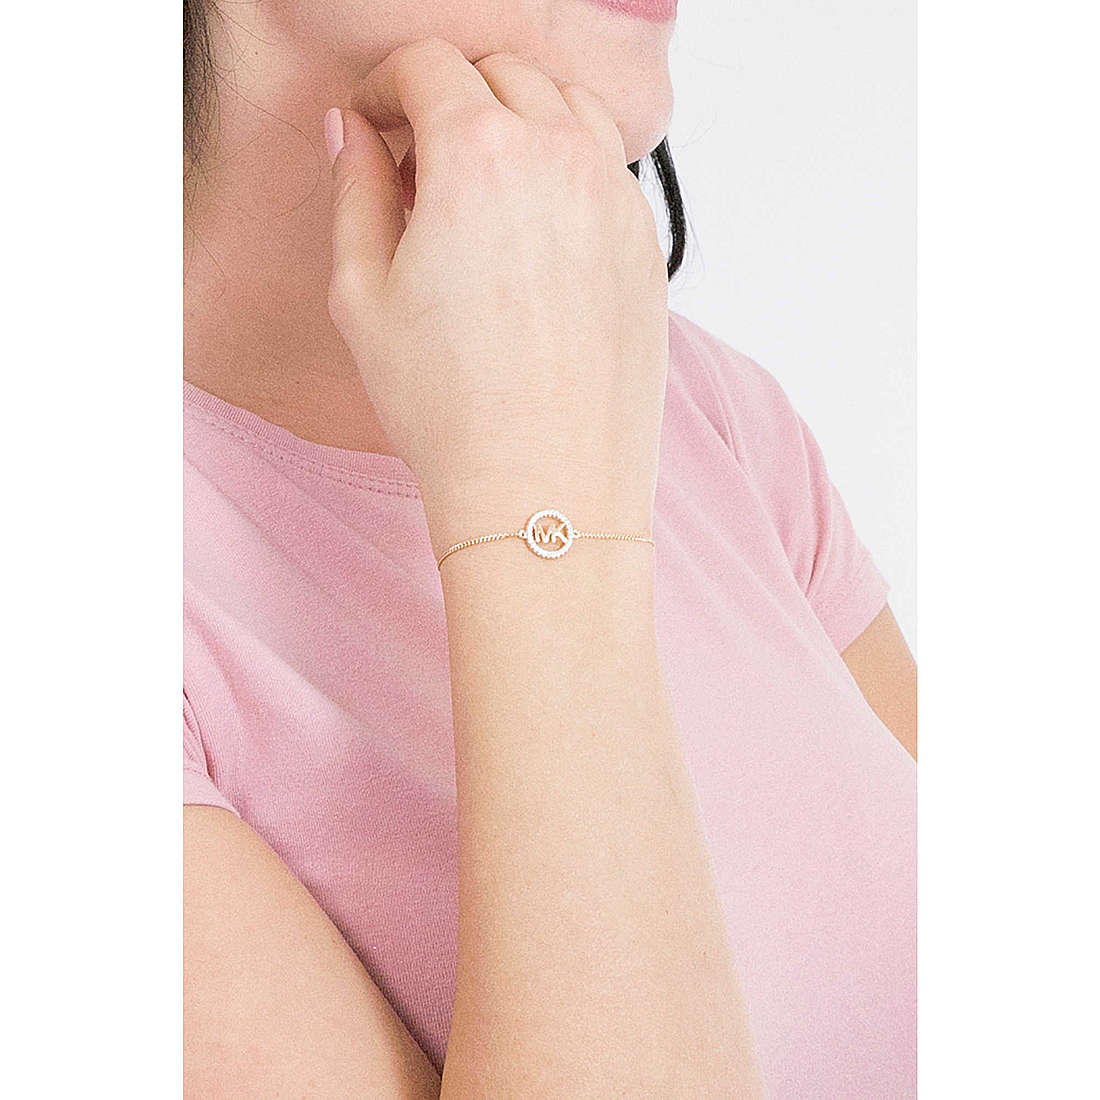 Michael Kors bracelets Kors Mk woman MKC1246AN710 wearing